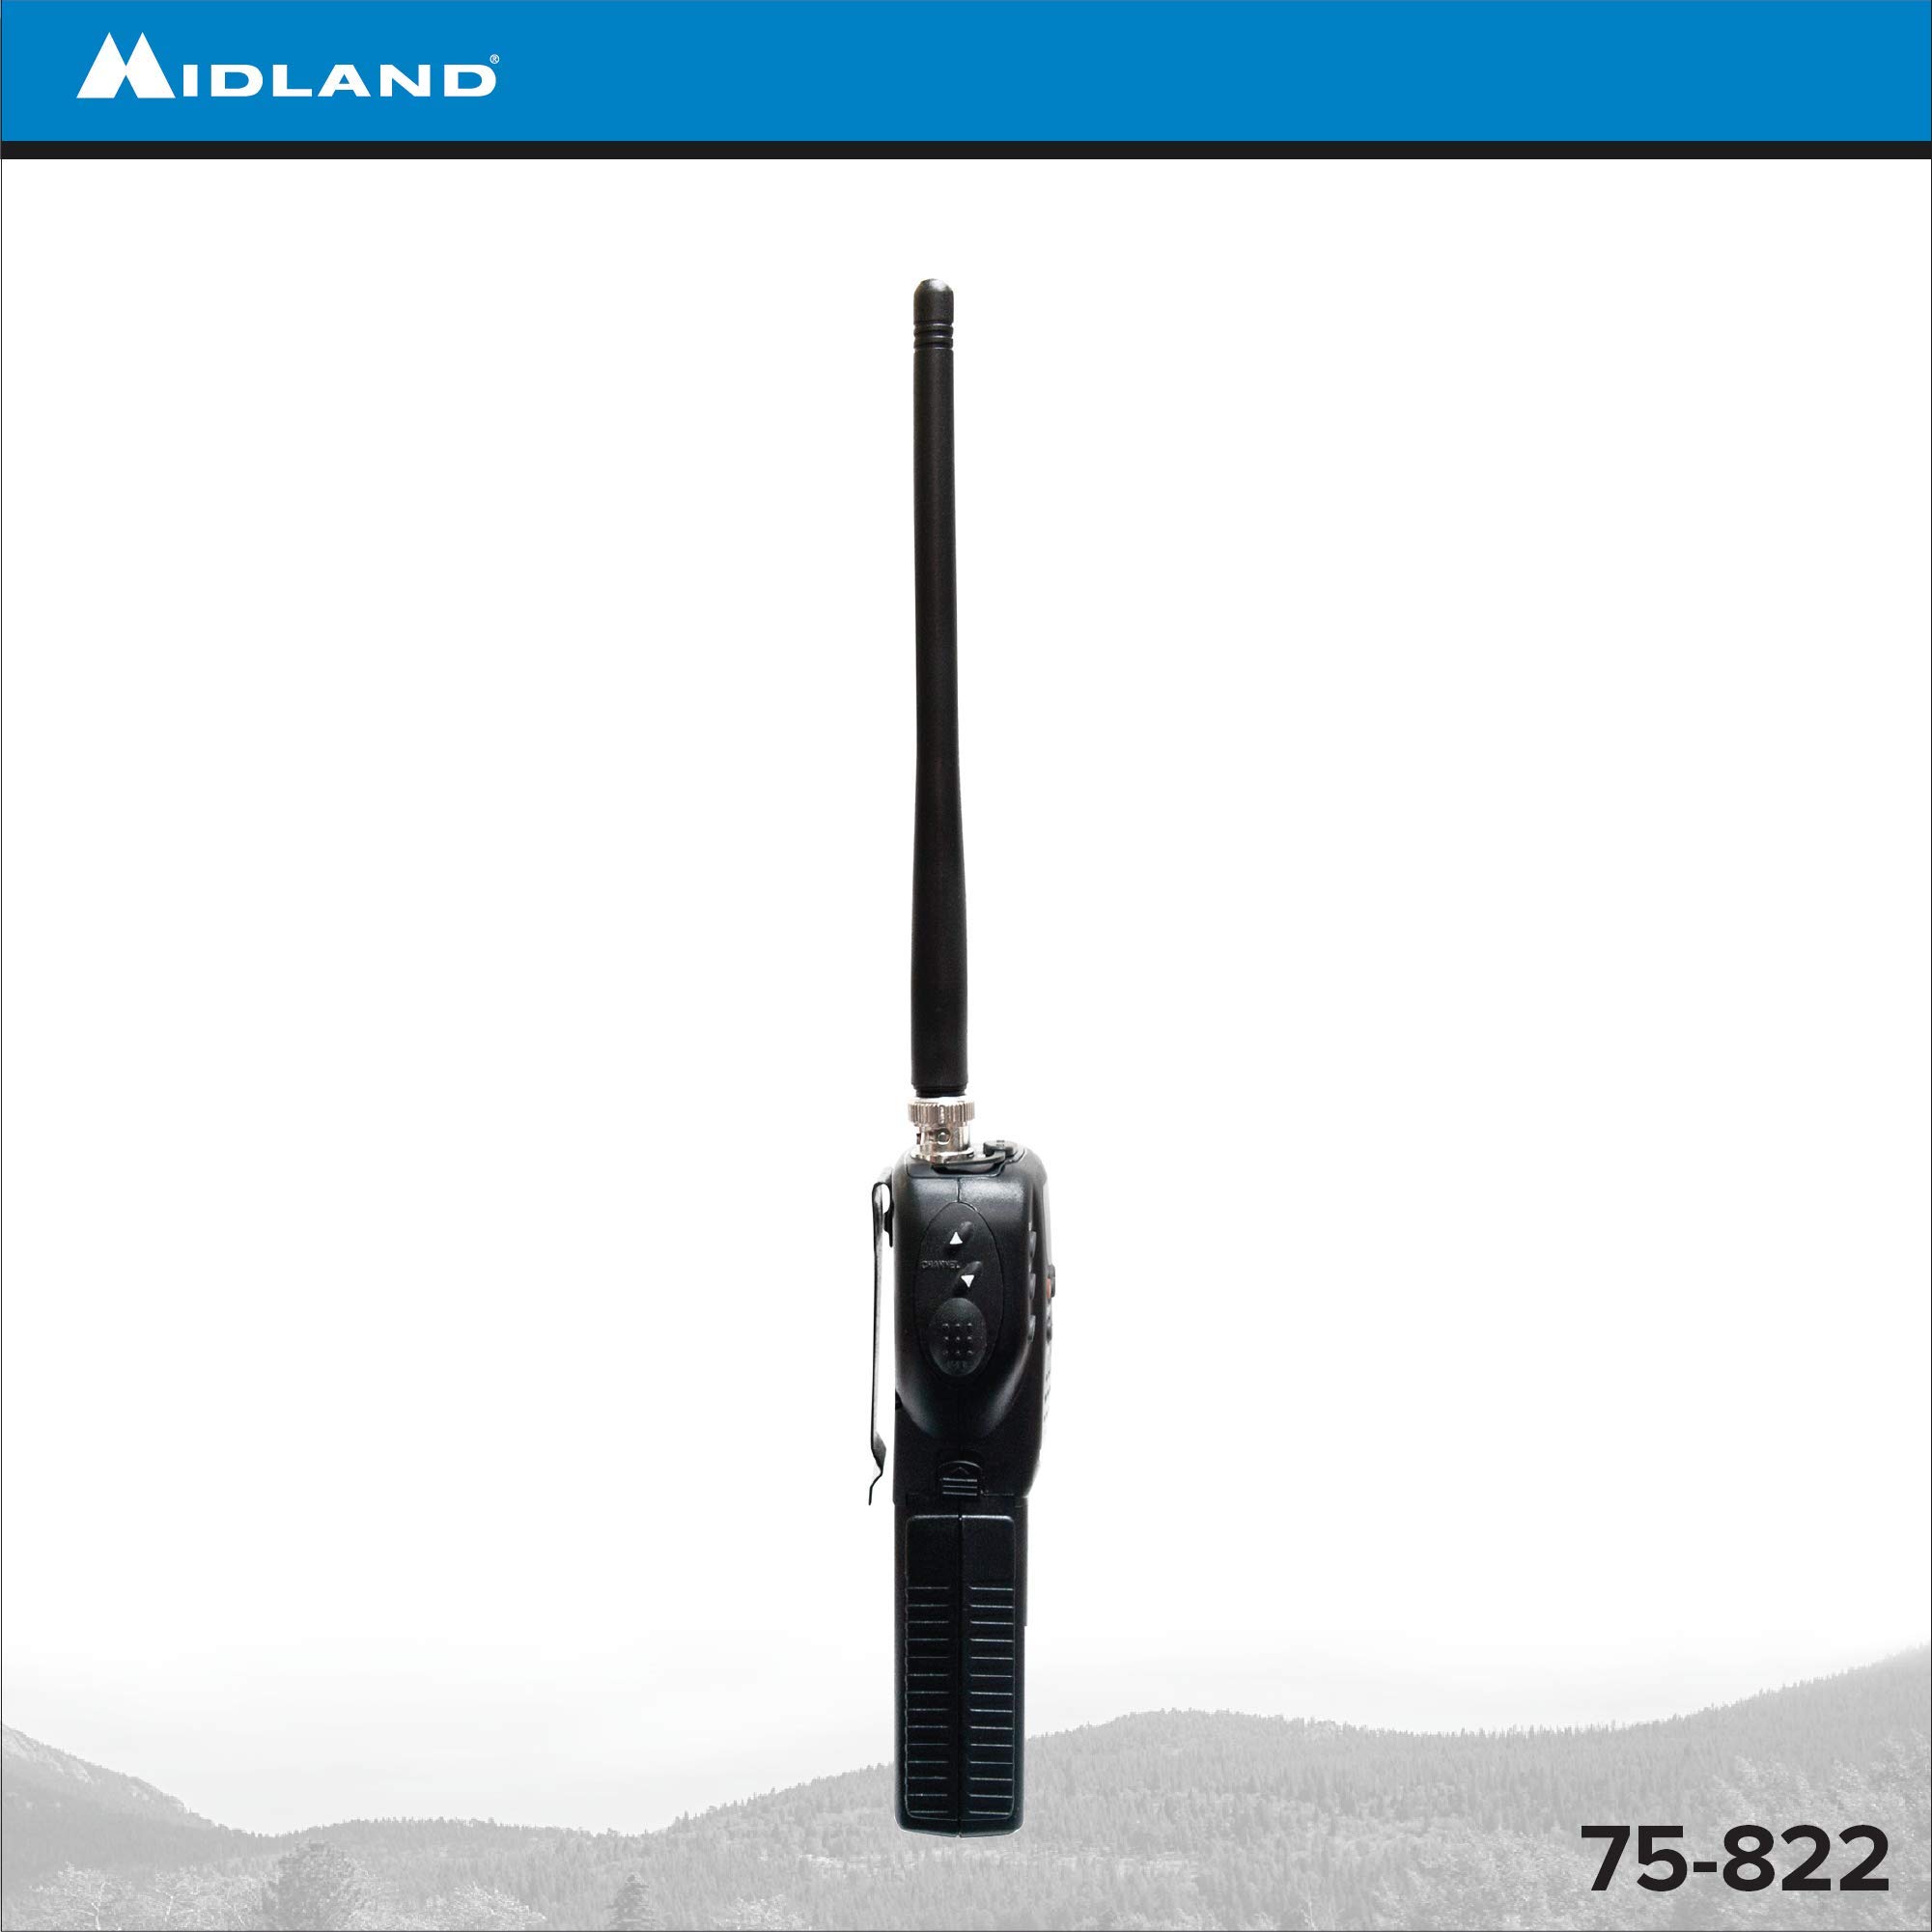 Midland 75-822 40 Channel CB-Way Radio